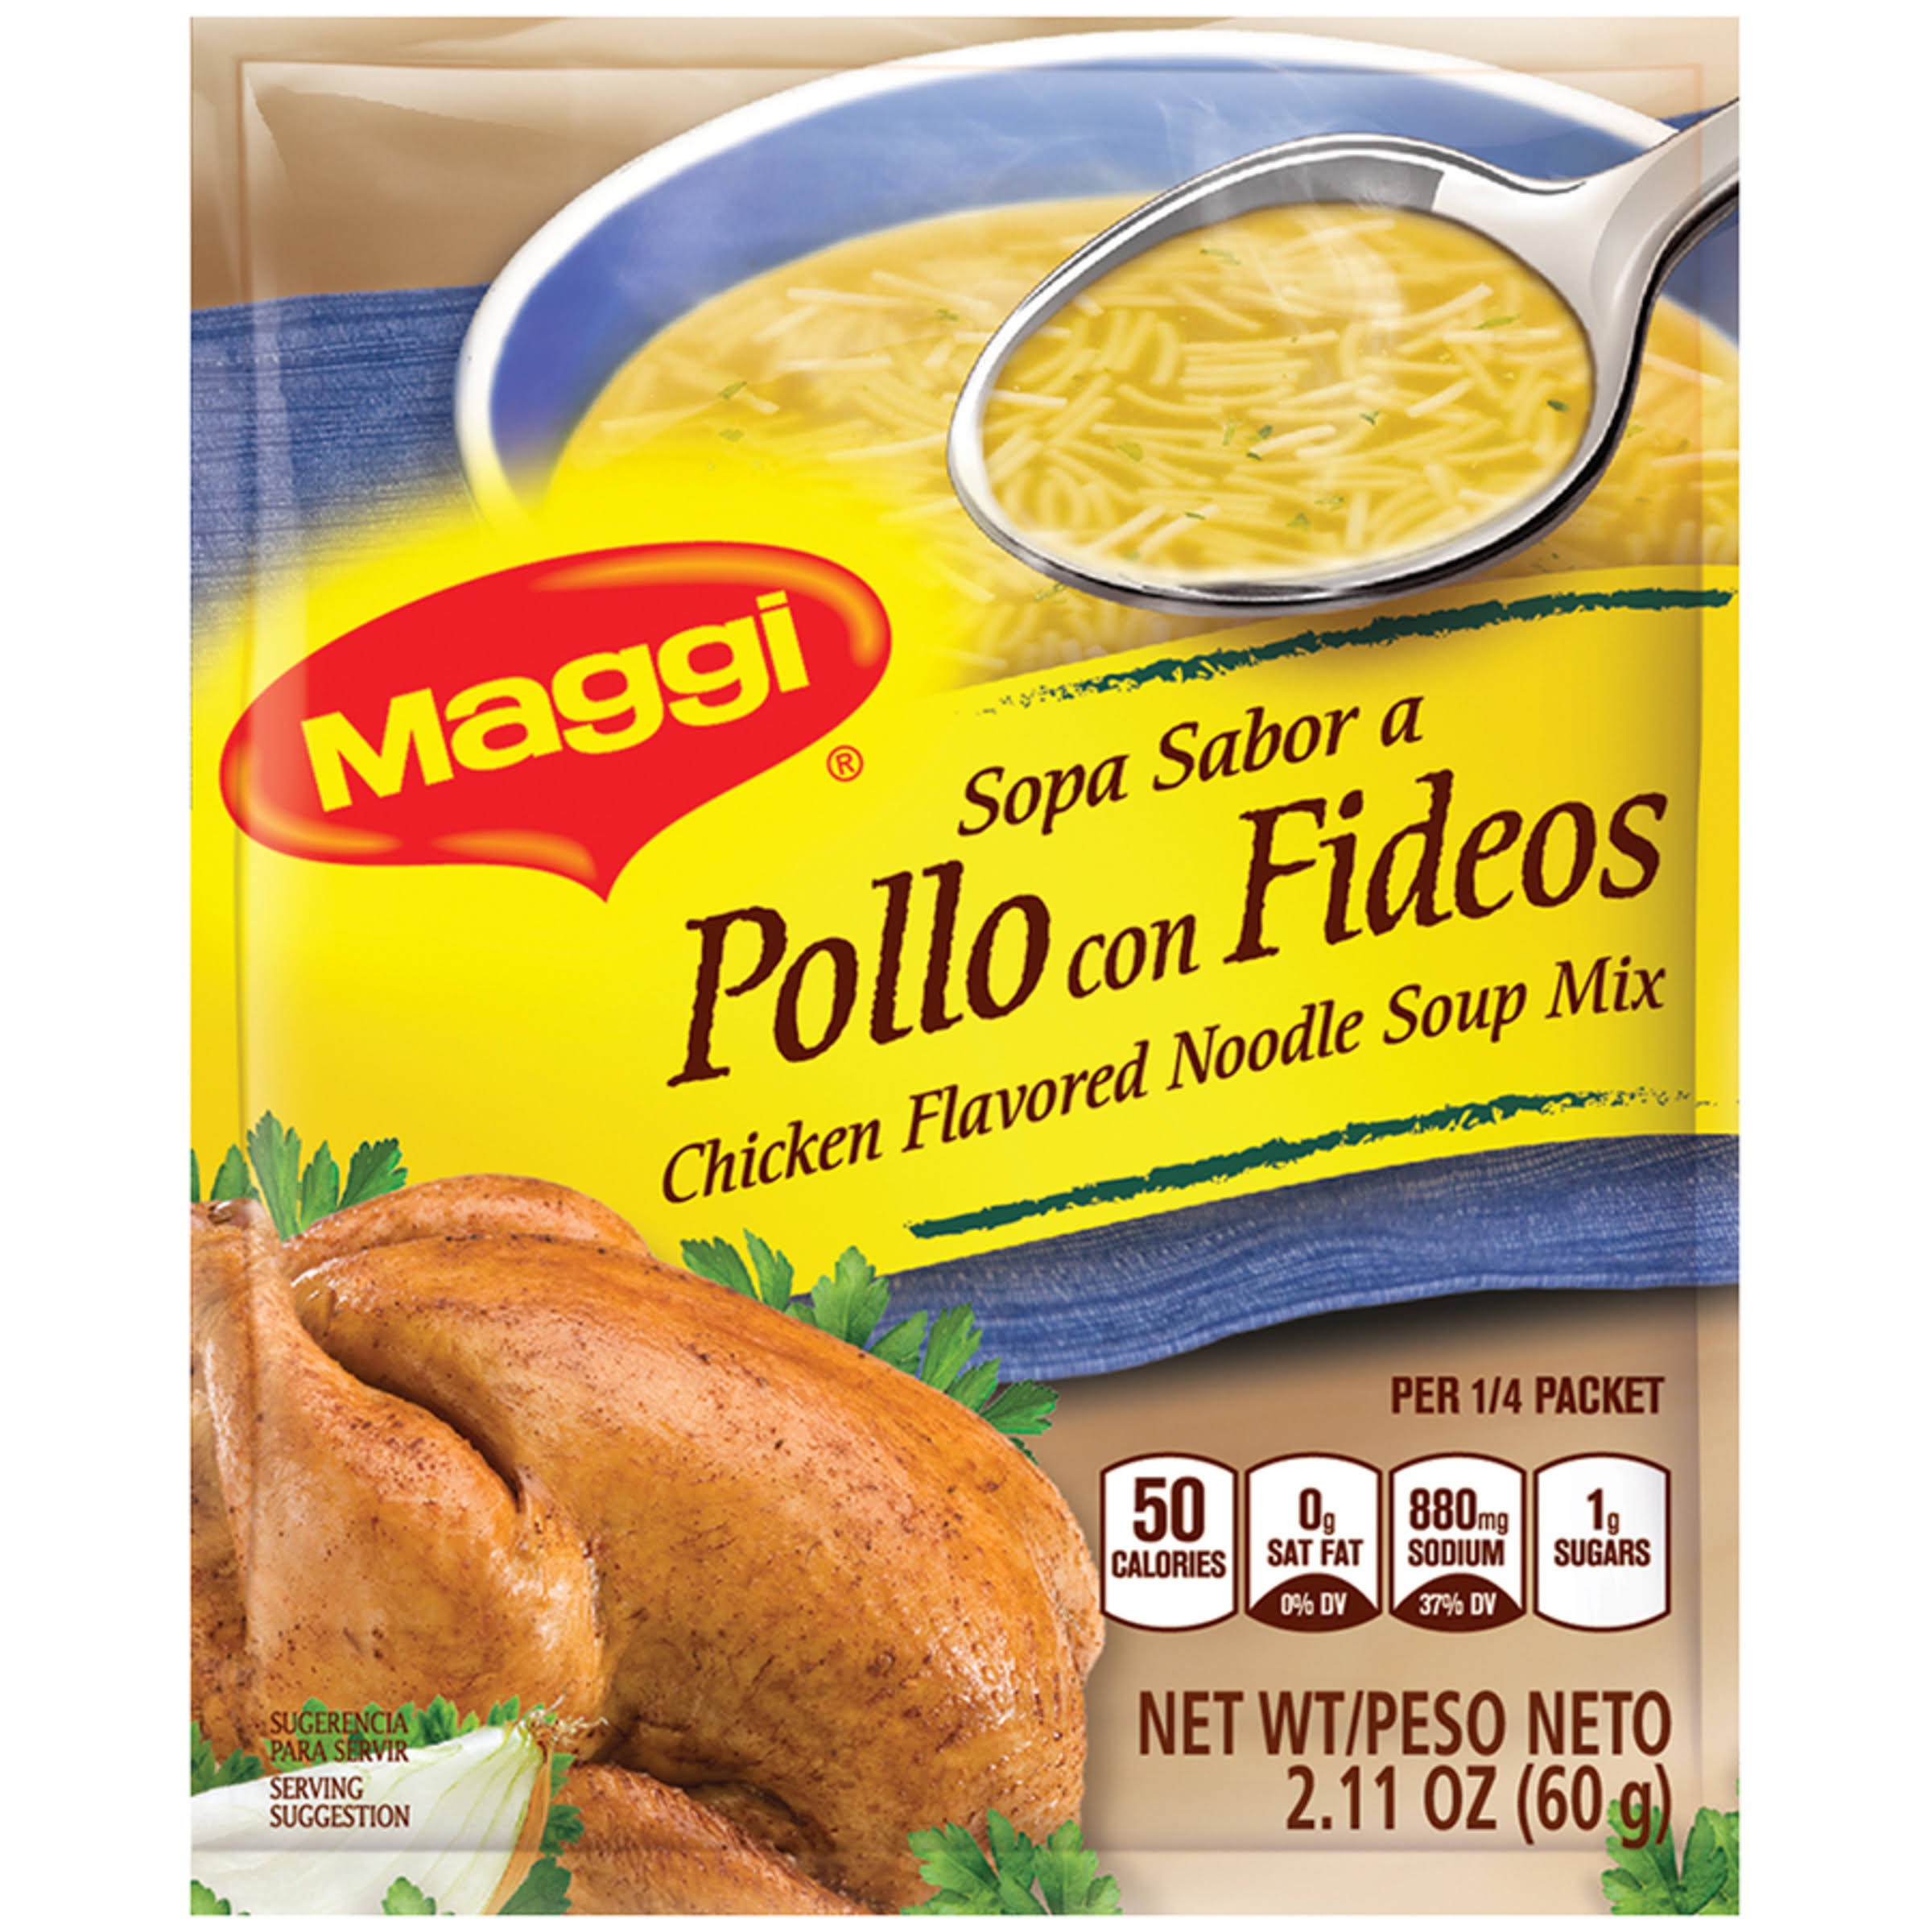 Maggi Chicken Flavored Noodle Soup Mix - 2.11 oz